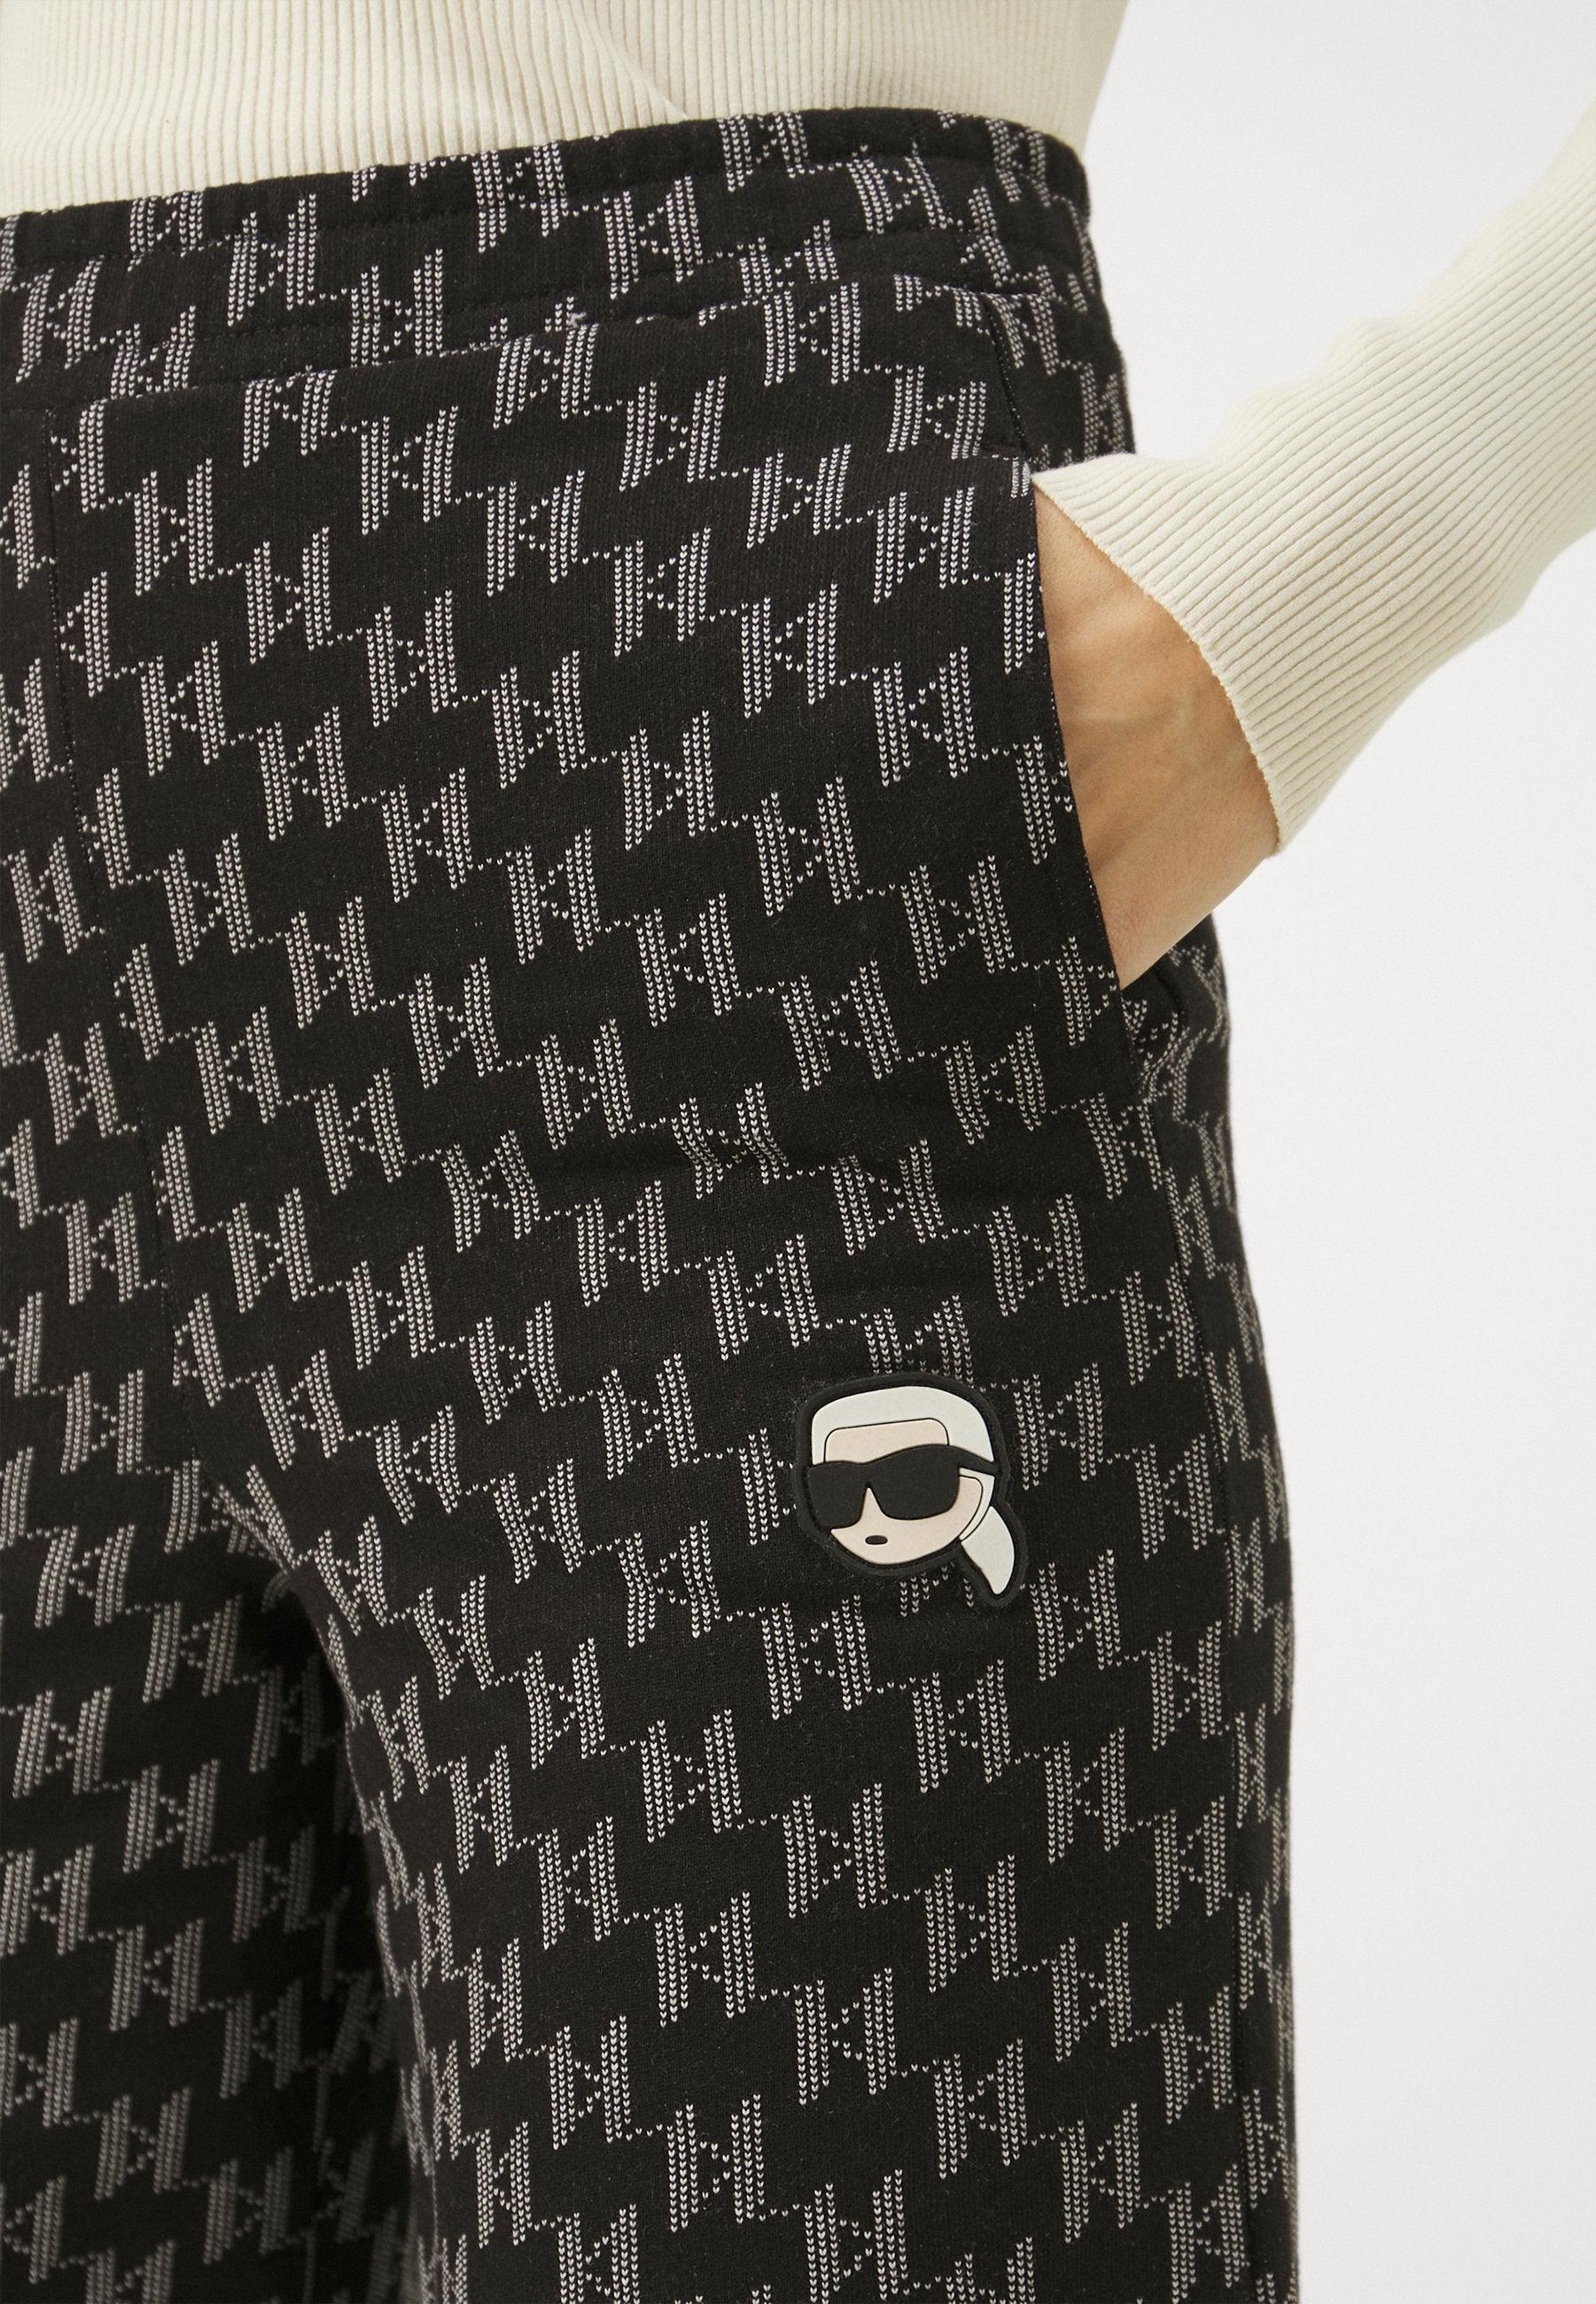 Pantaloni JACQUARD LOGO CULOTTES Karl Lagerfeld